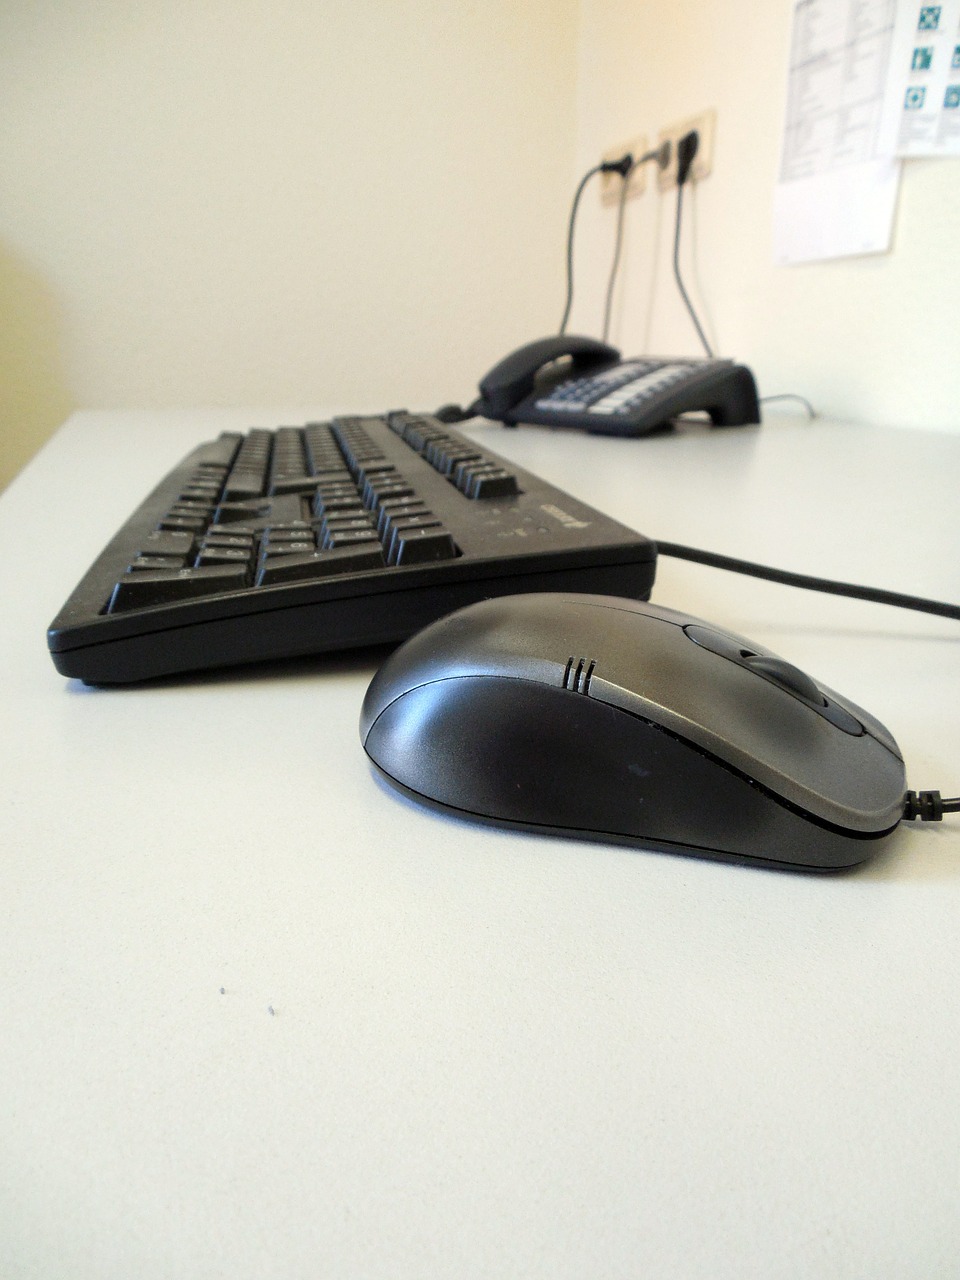 keyboard mouse phone free photo